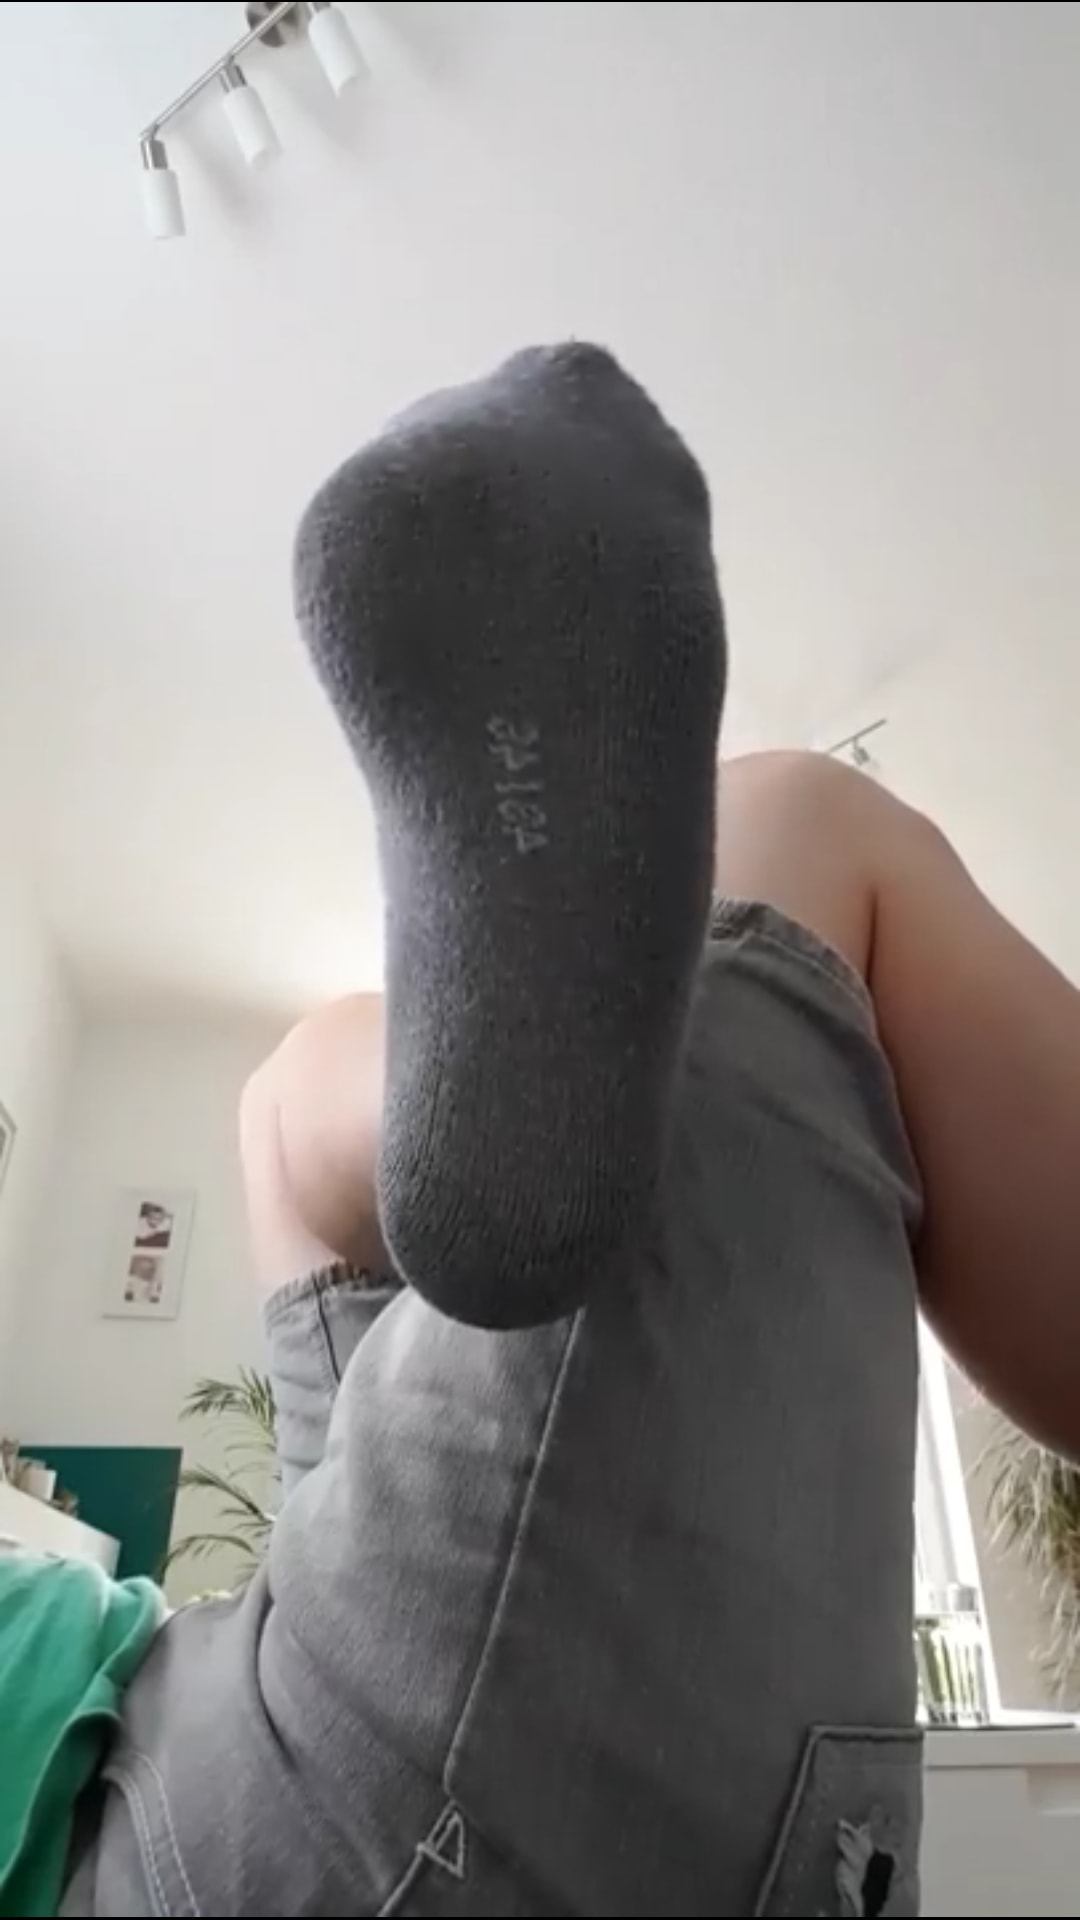 Hot boy shows his Feet #006 [YouTube.com]